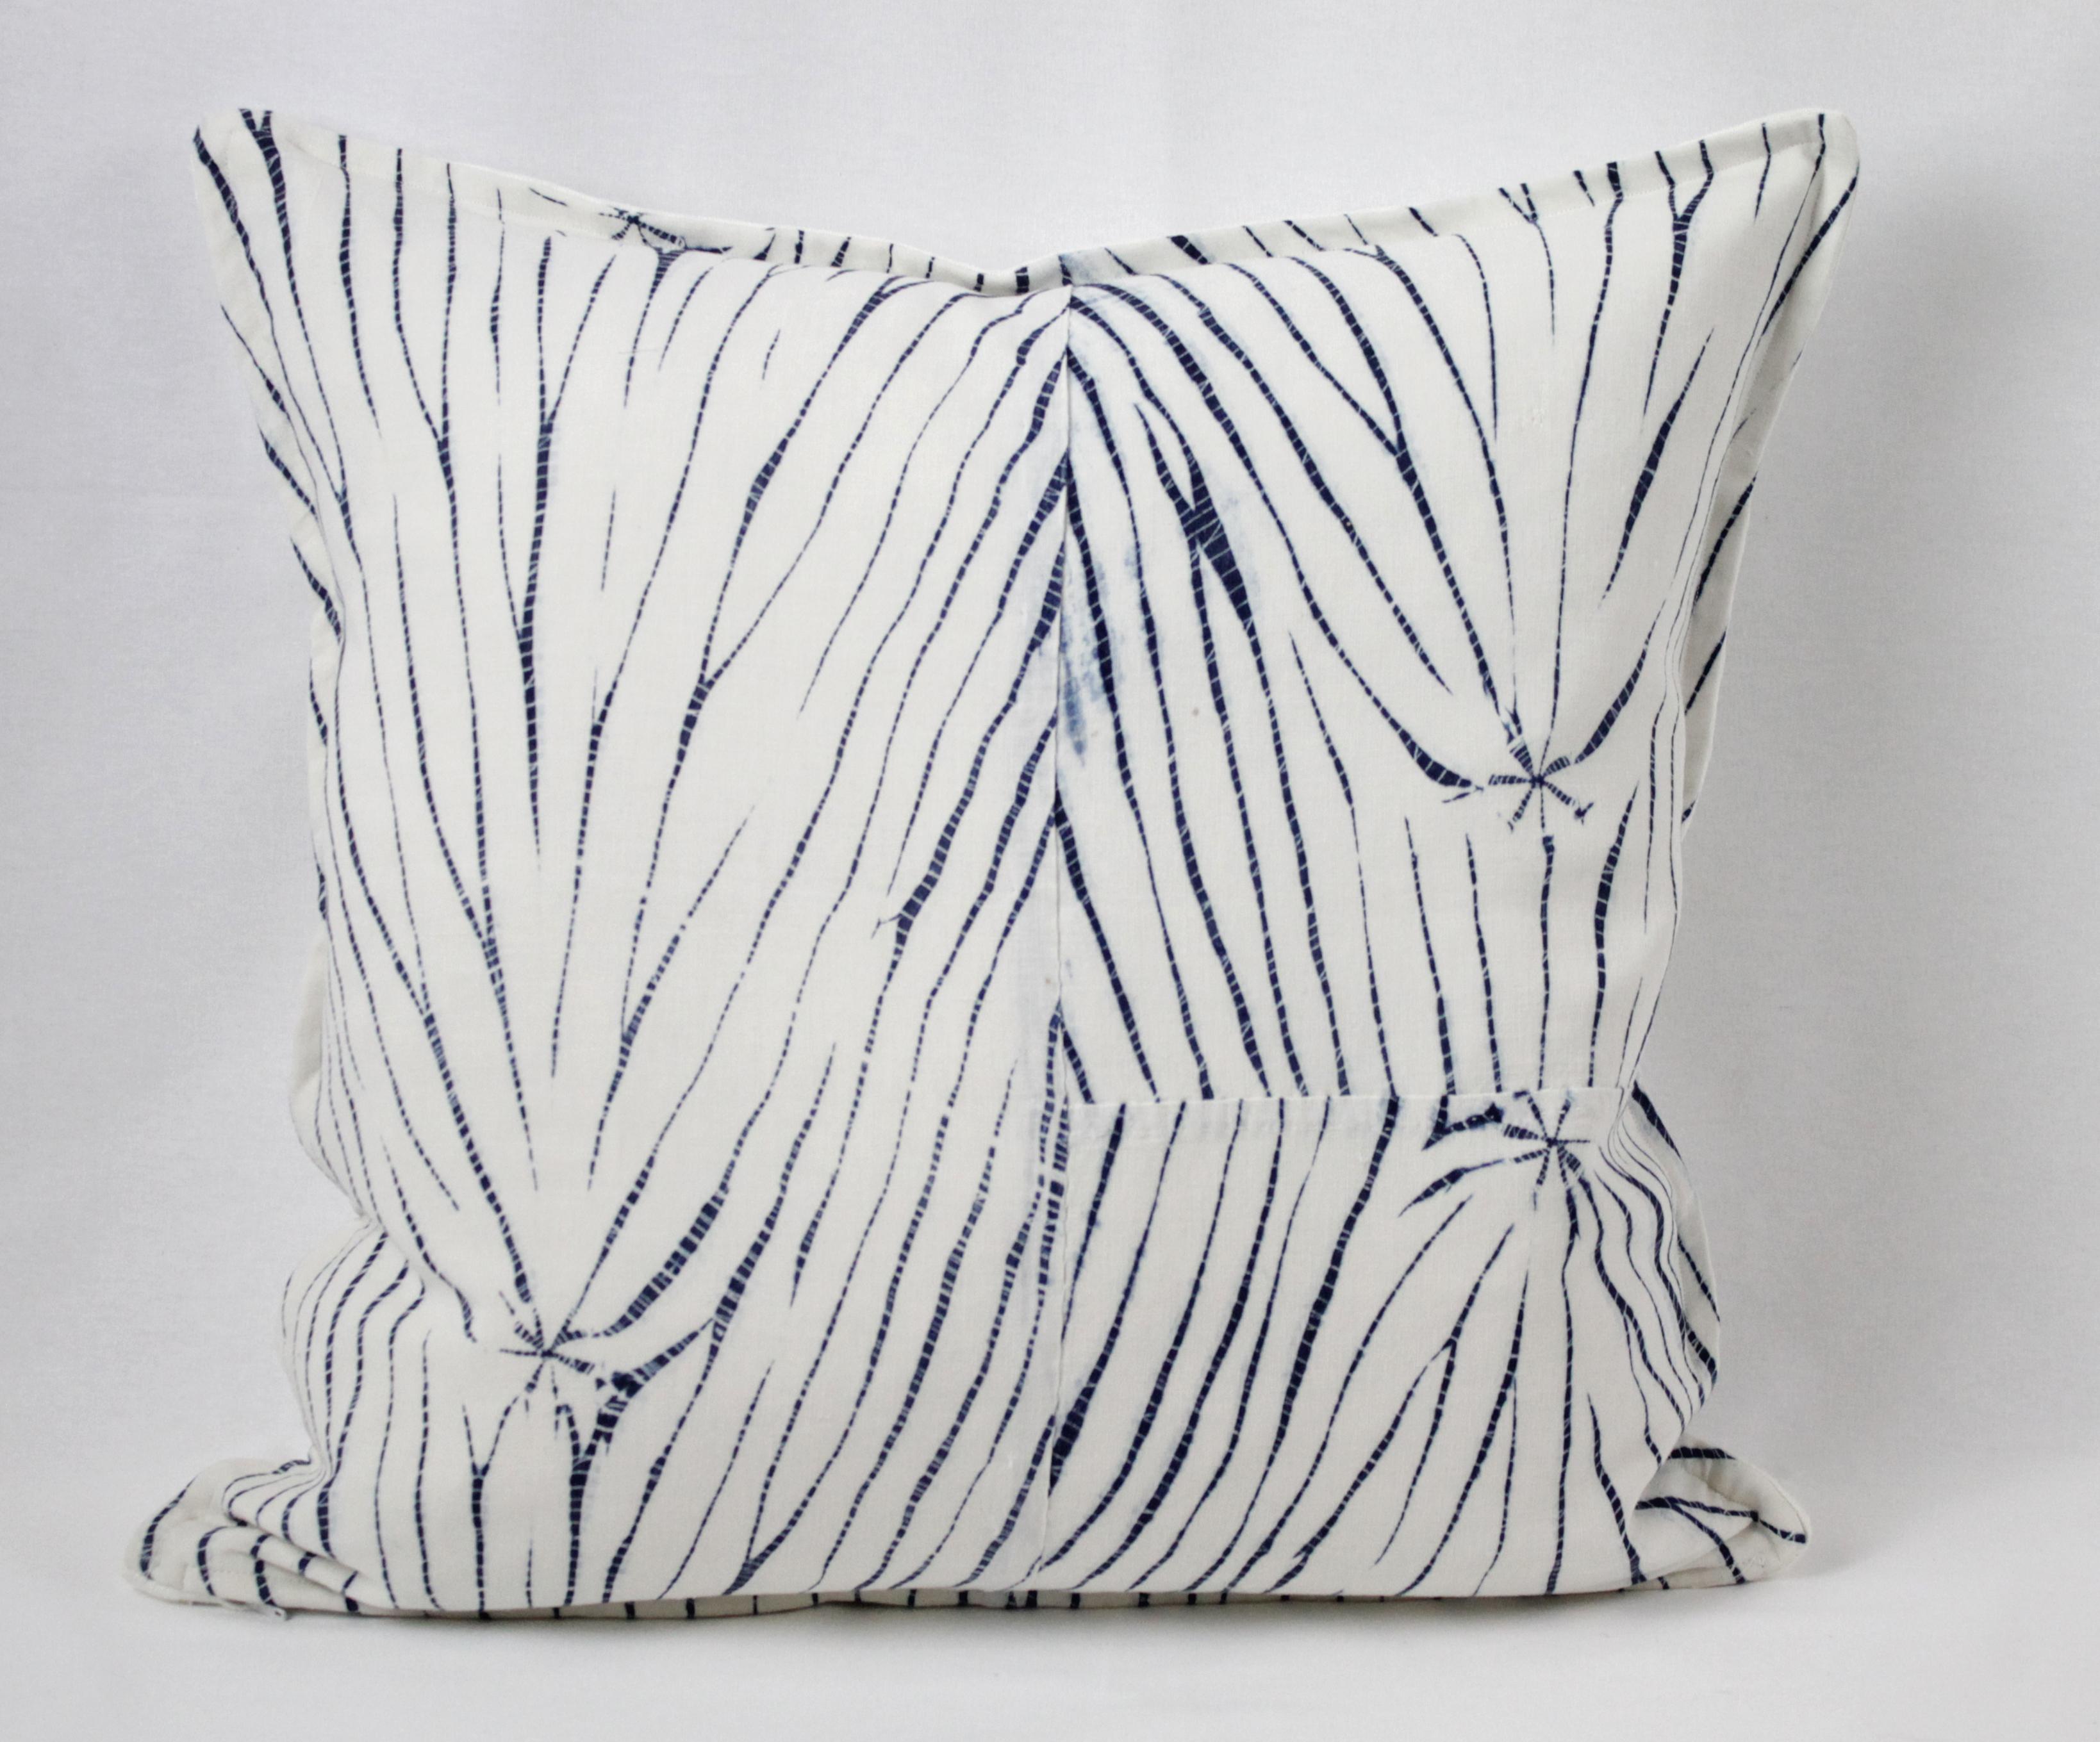 Vintage Shibori Dyed Textile Pillow with White Linen For Sale 8